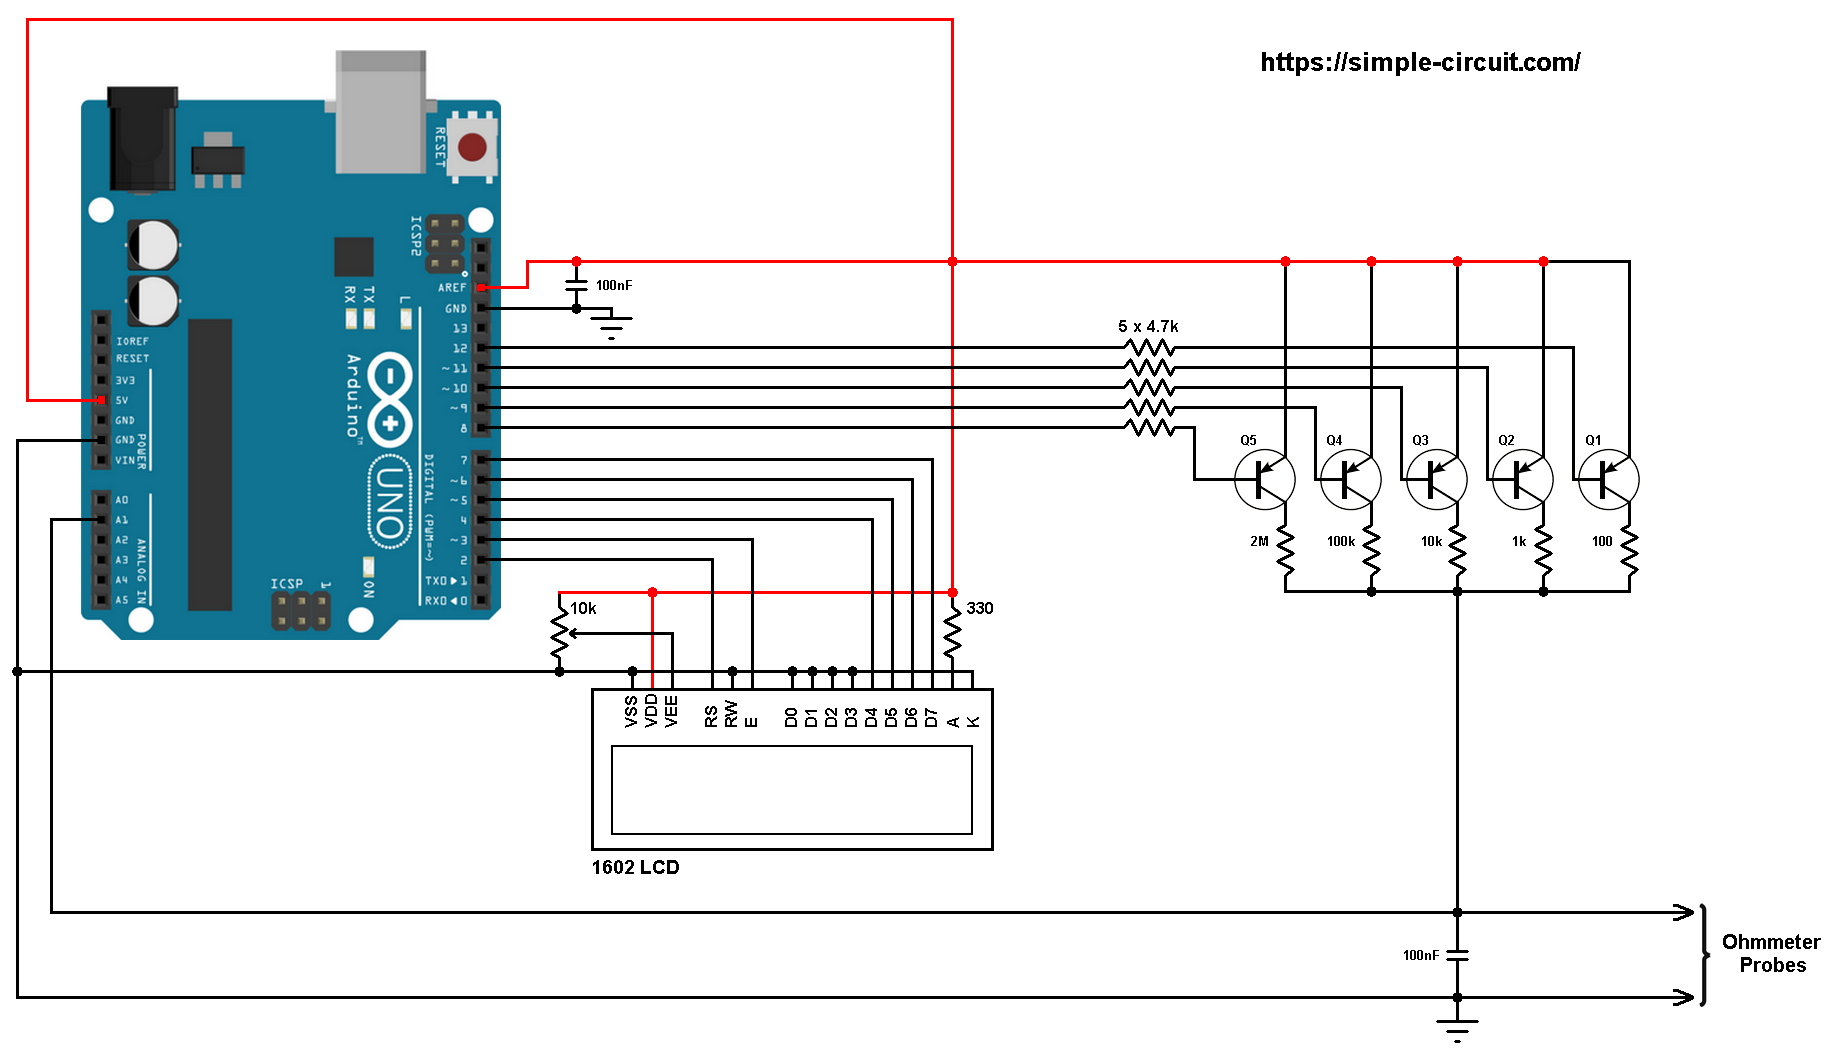 https://simple-circuit.com/wp-content/uploads/2020/01/arduino-autorange-ohmmeter-circuit.png